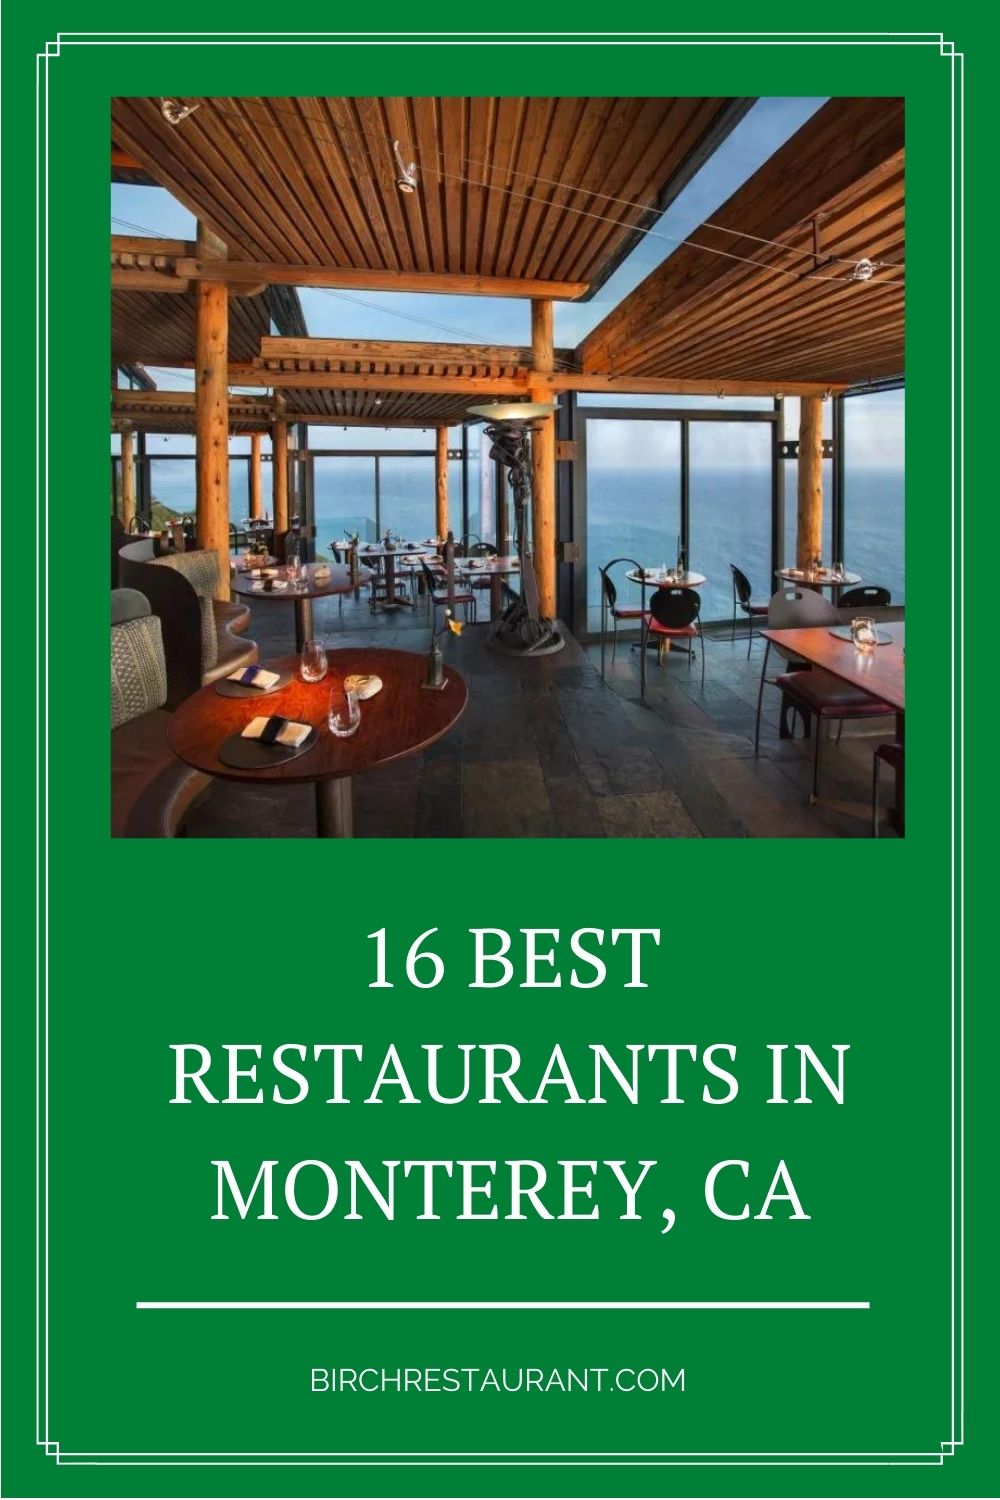 Best Restaurants in Monterey